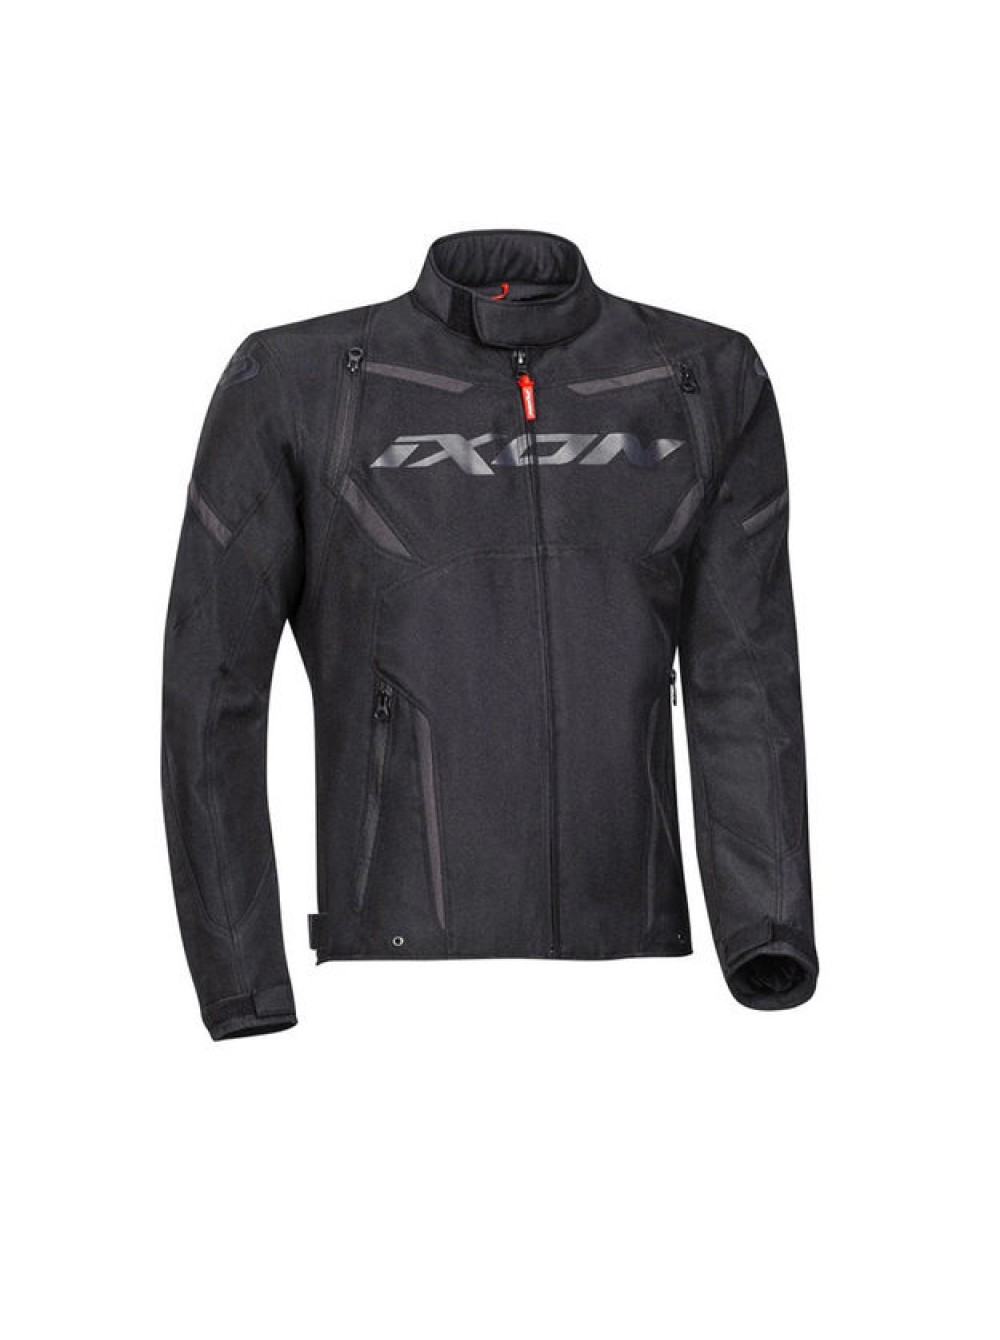 Продажа Куртка текстильная мужская Ixon Striker black